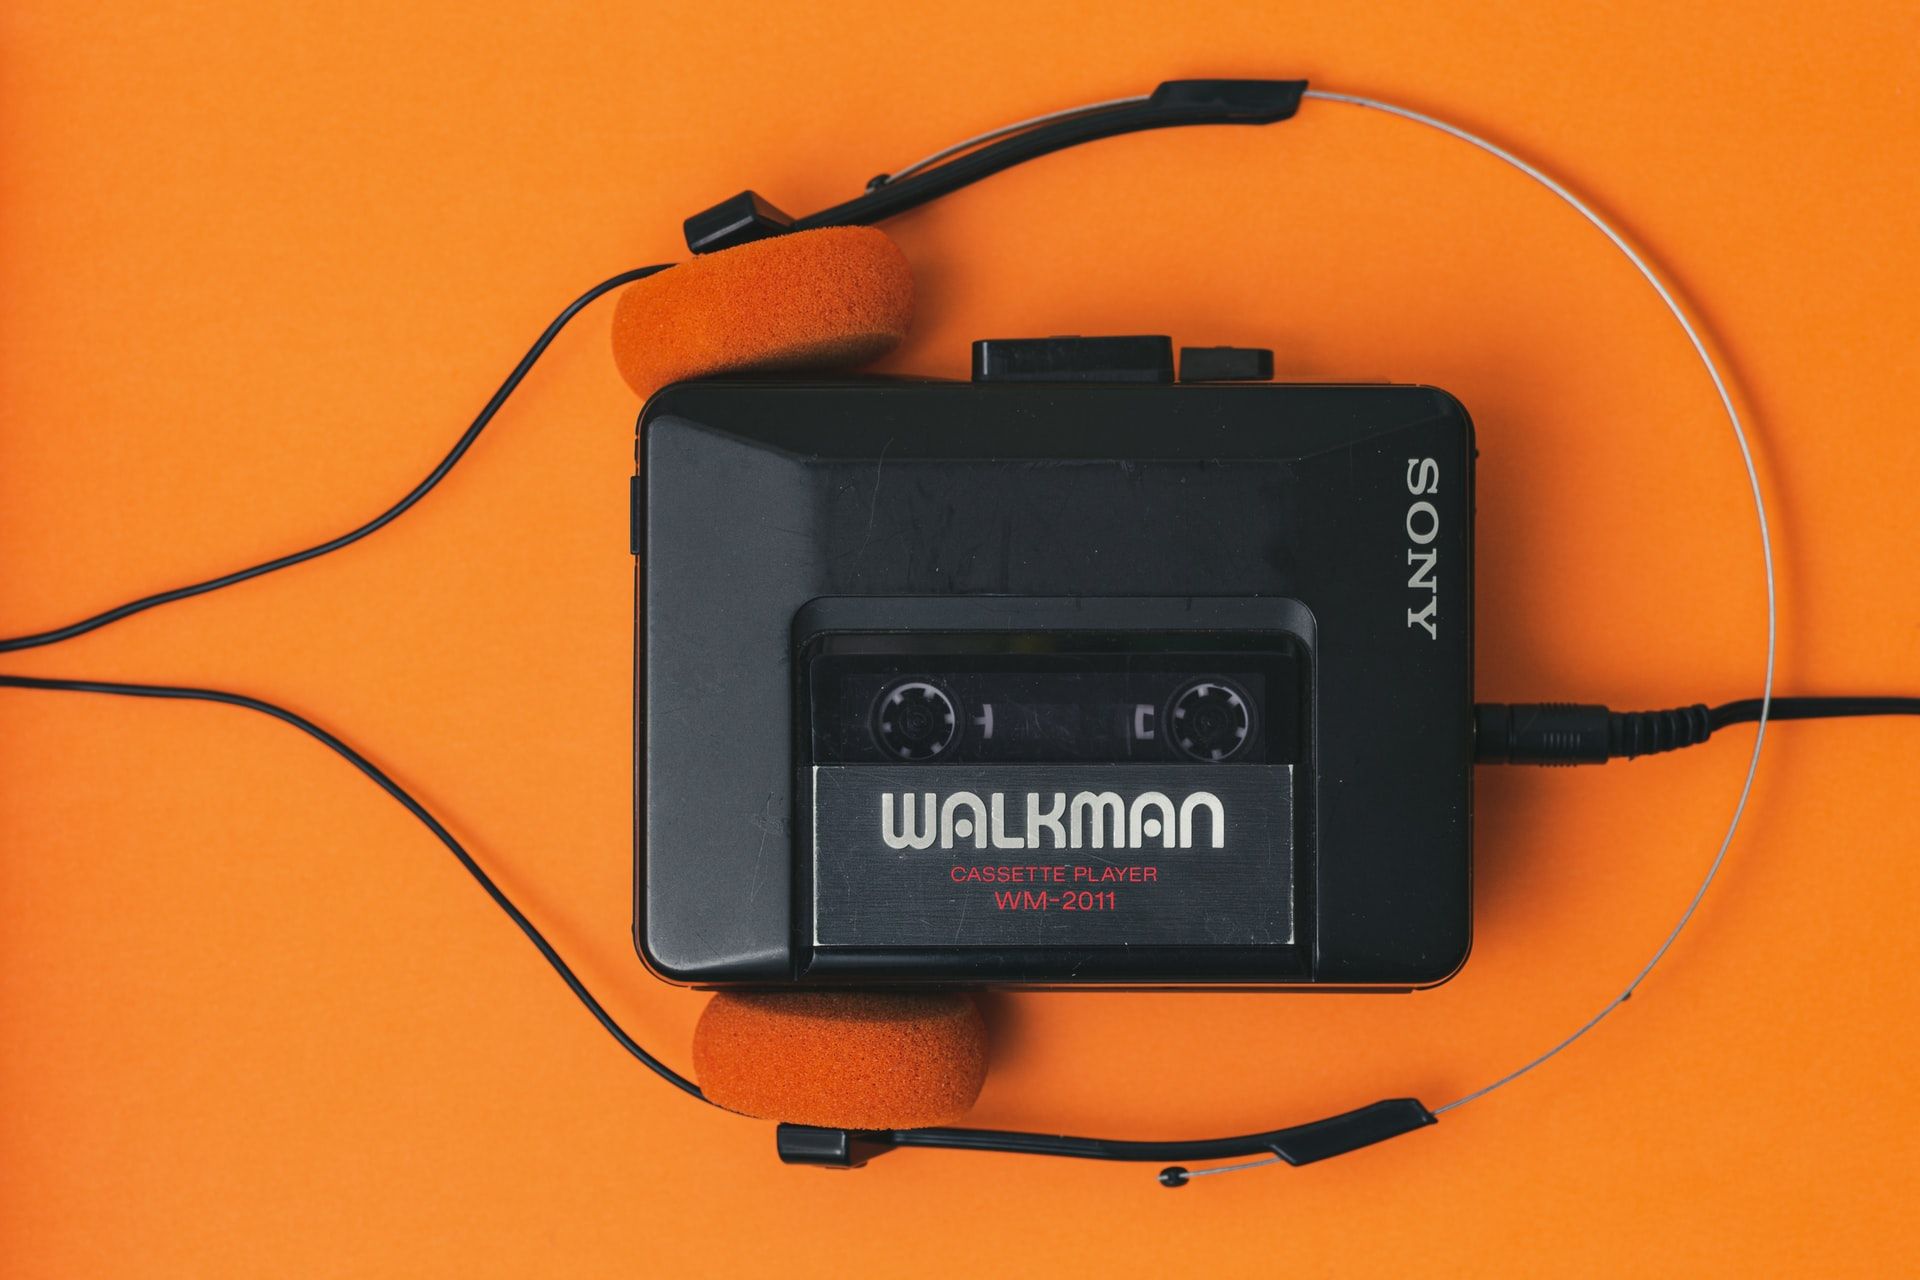 Image shows a vintage Walkman on an orange background